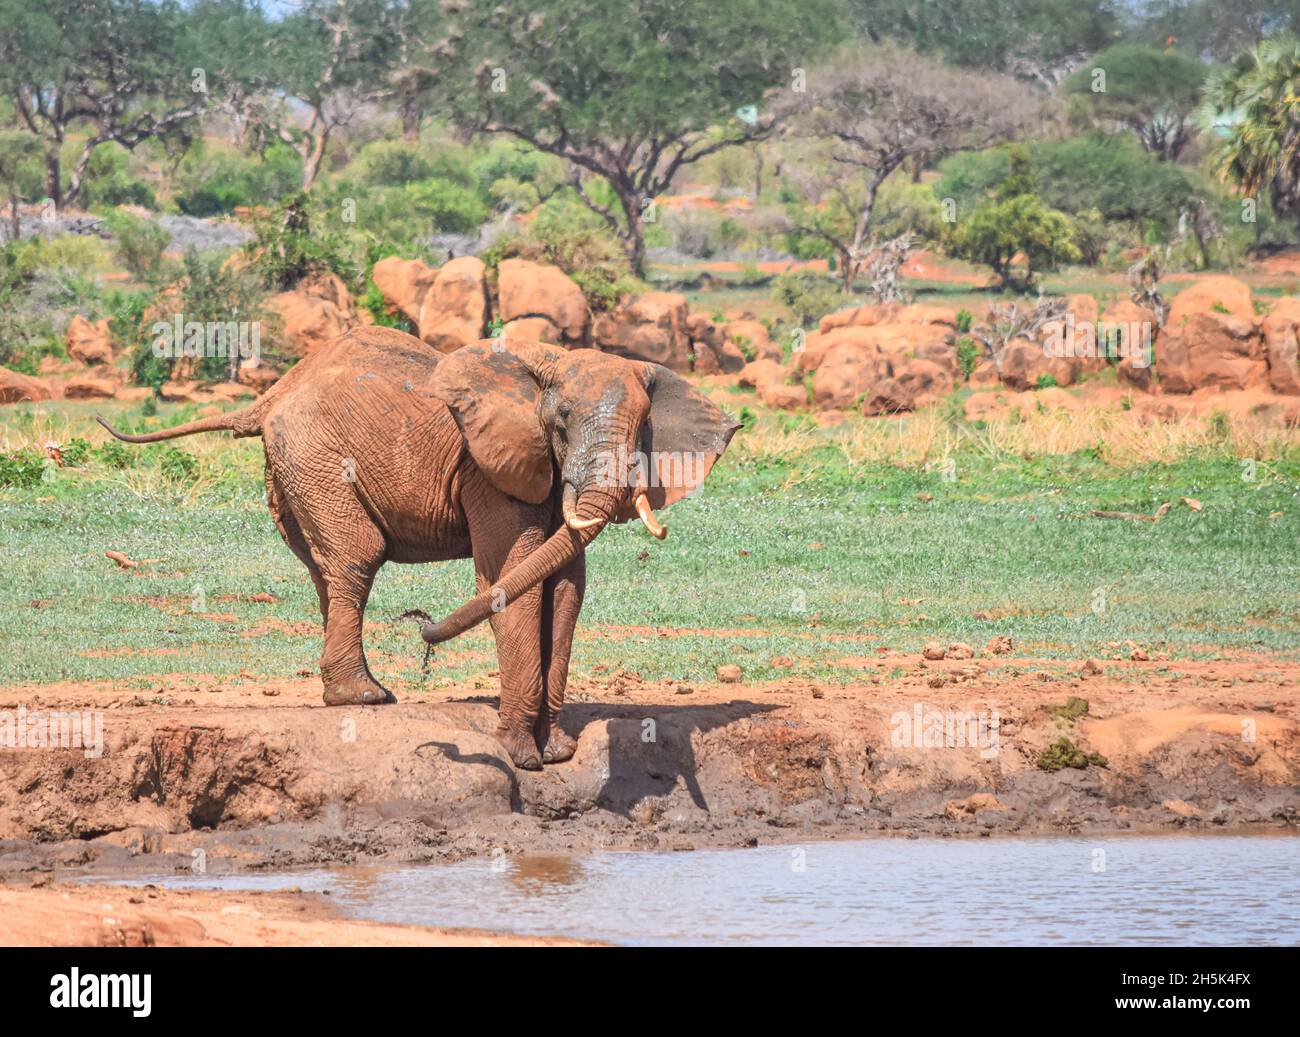 Elefante toro grande (Loxodonta africana) rociando agua fangosa sobre sí mismo en un pozo de agua. Parque Nacional del Este de Tsavo, Kenia. Foto de stock